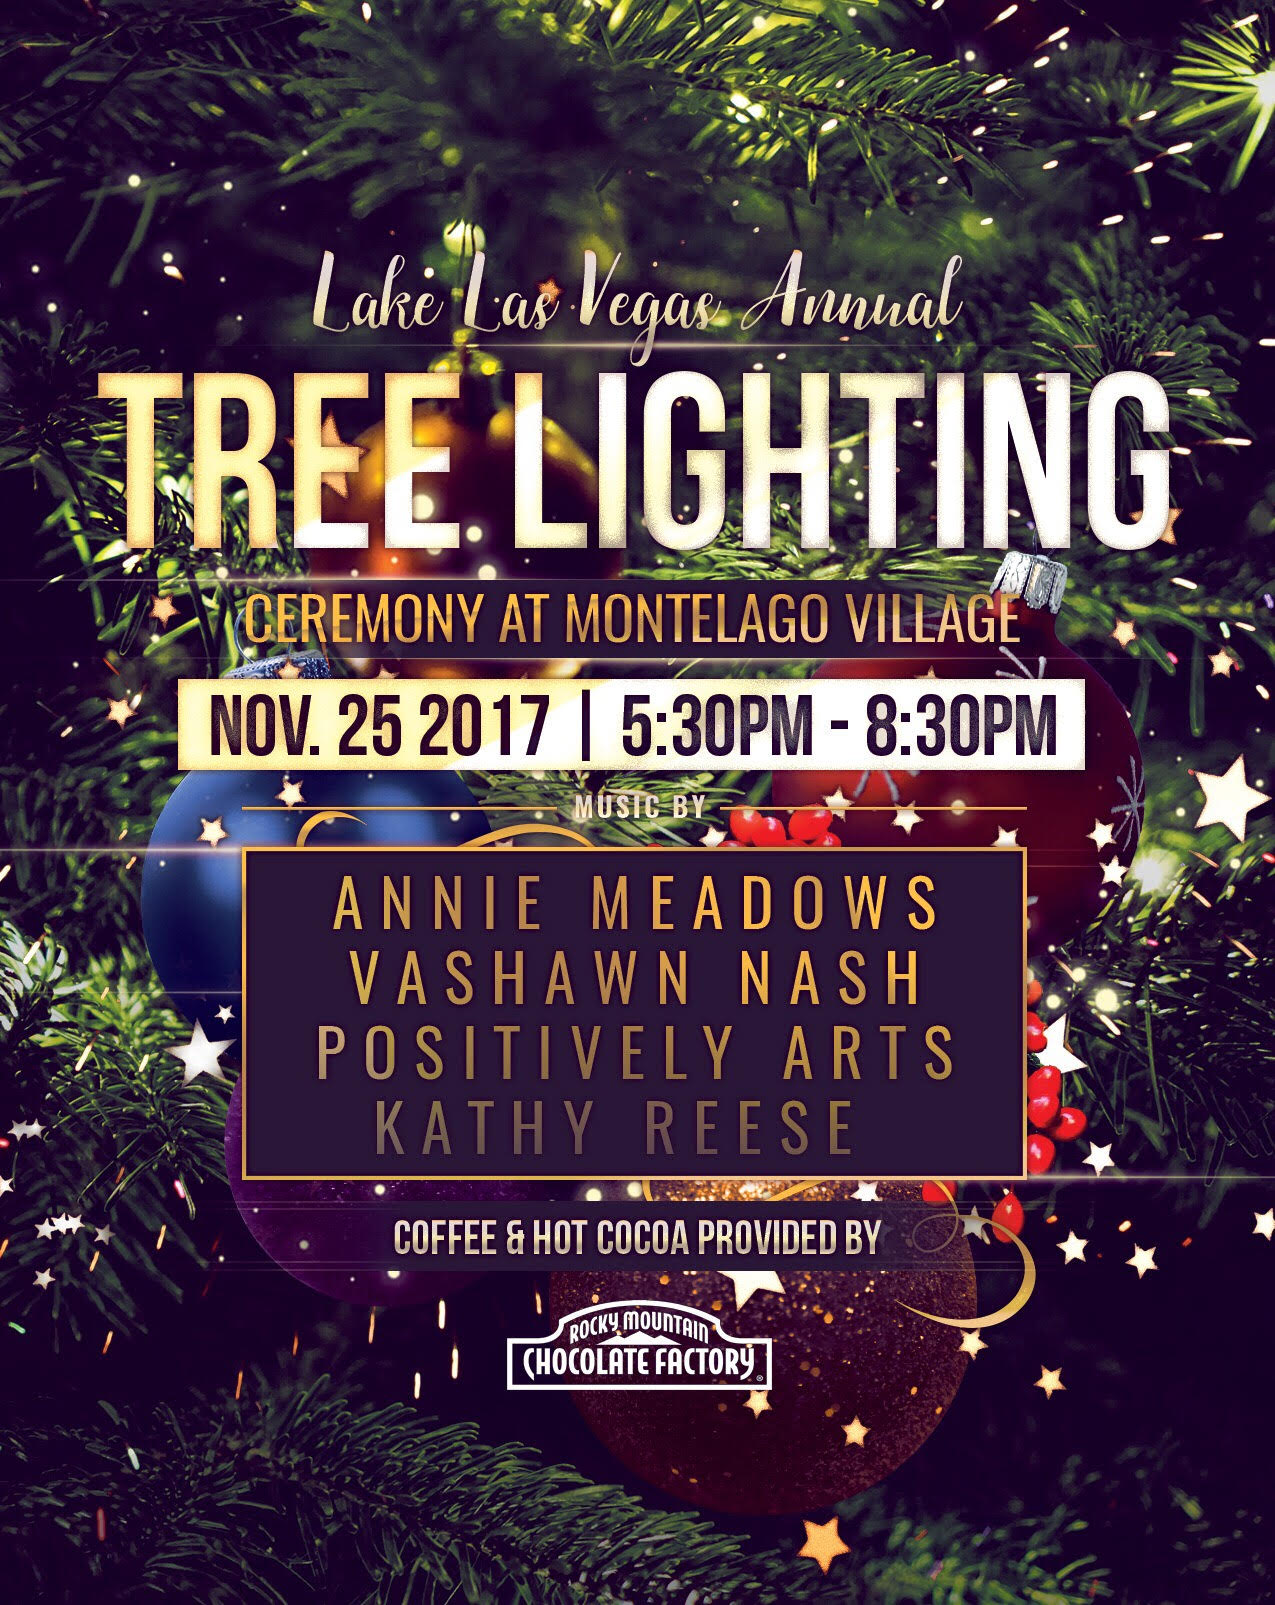 The Annual Christmas Tree Lighting Ceremony at Lake Las Vegas on Nov